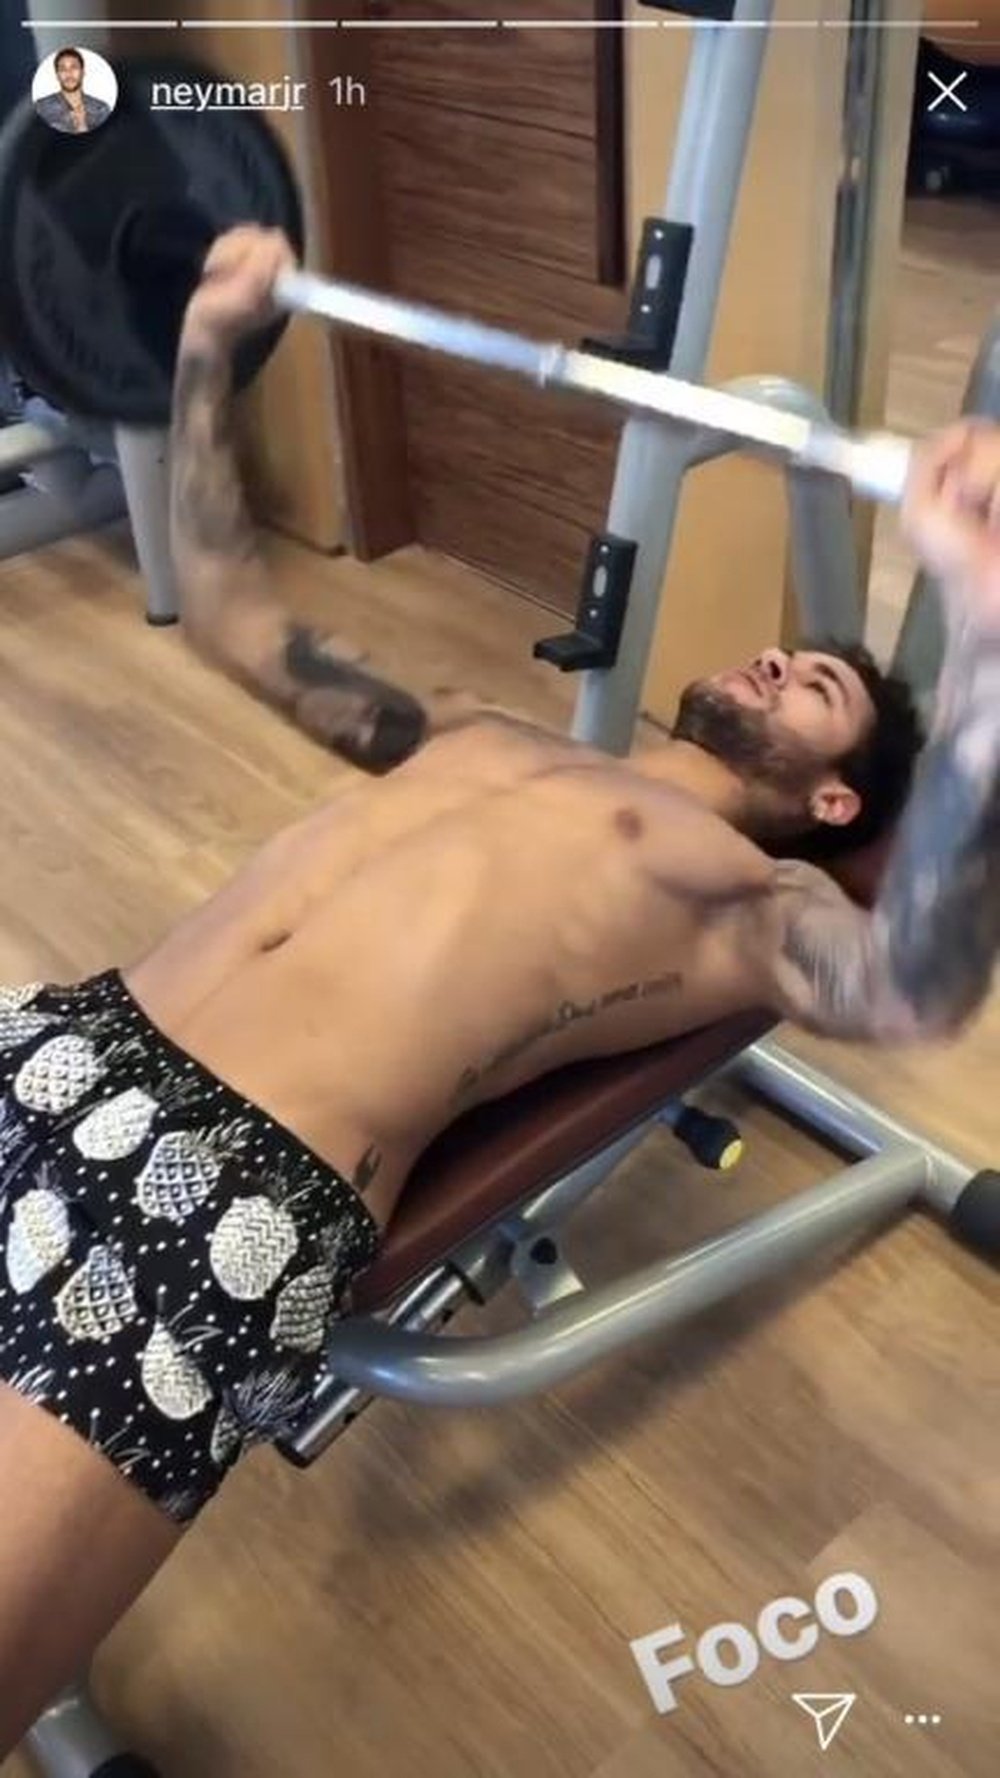 The Brazilian returned to the gym following surgery. Instagram/Neymarjr